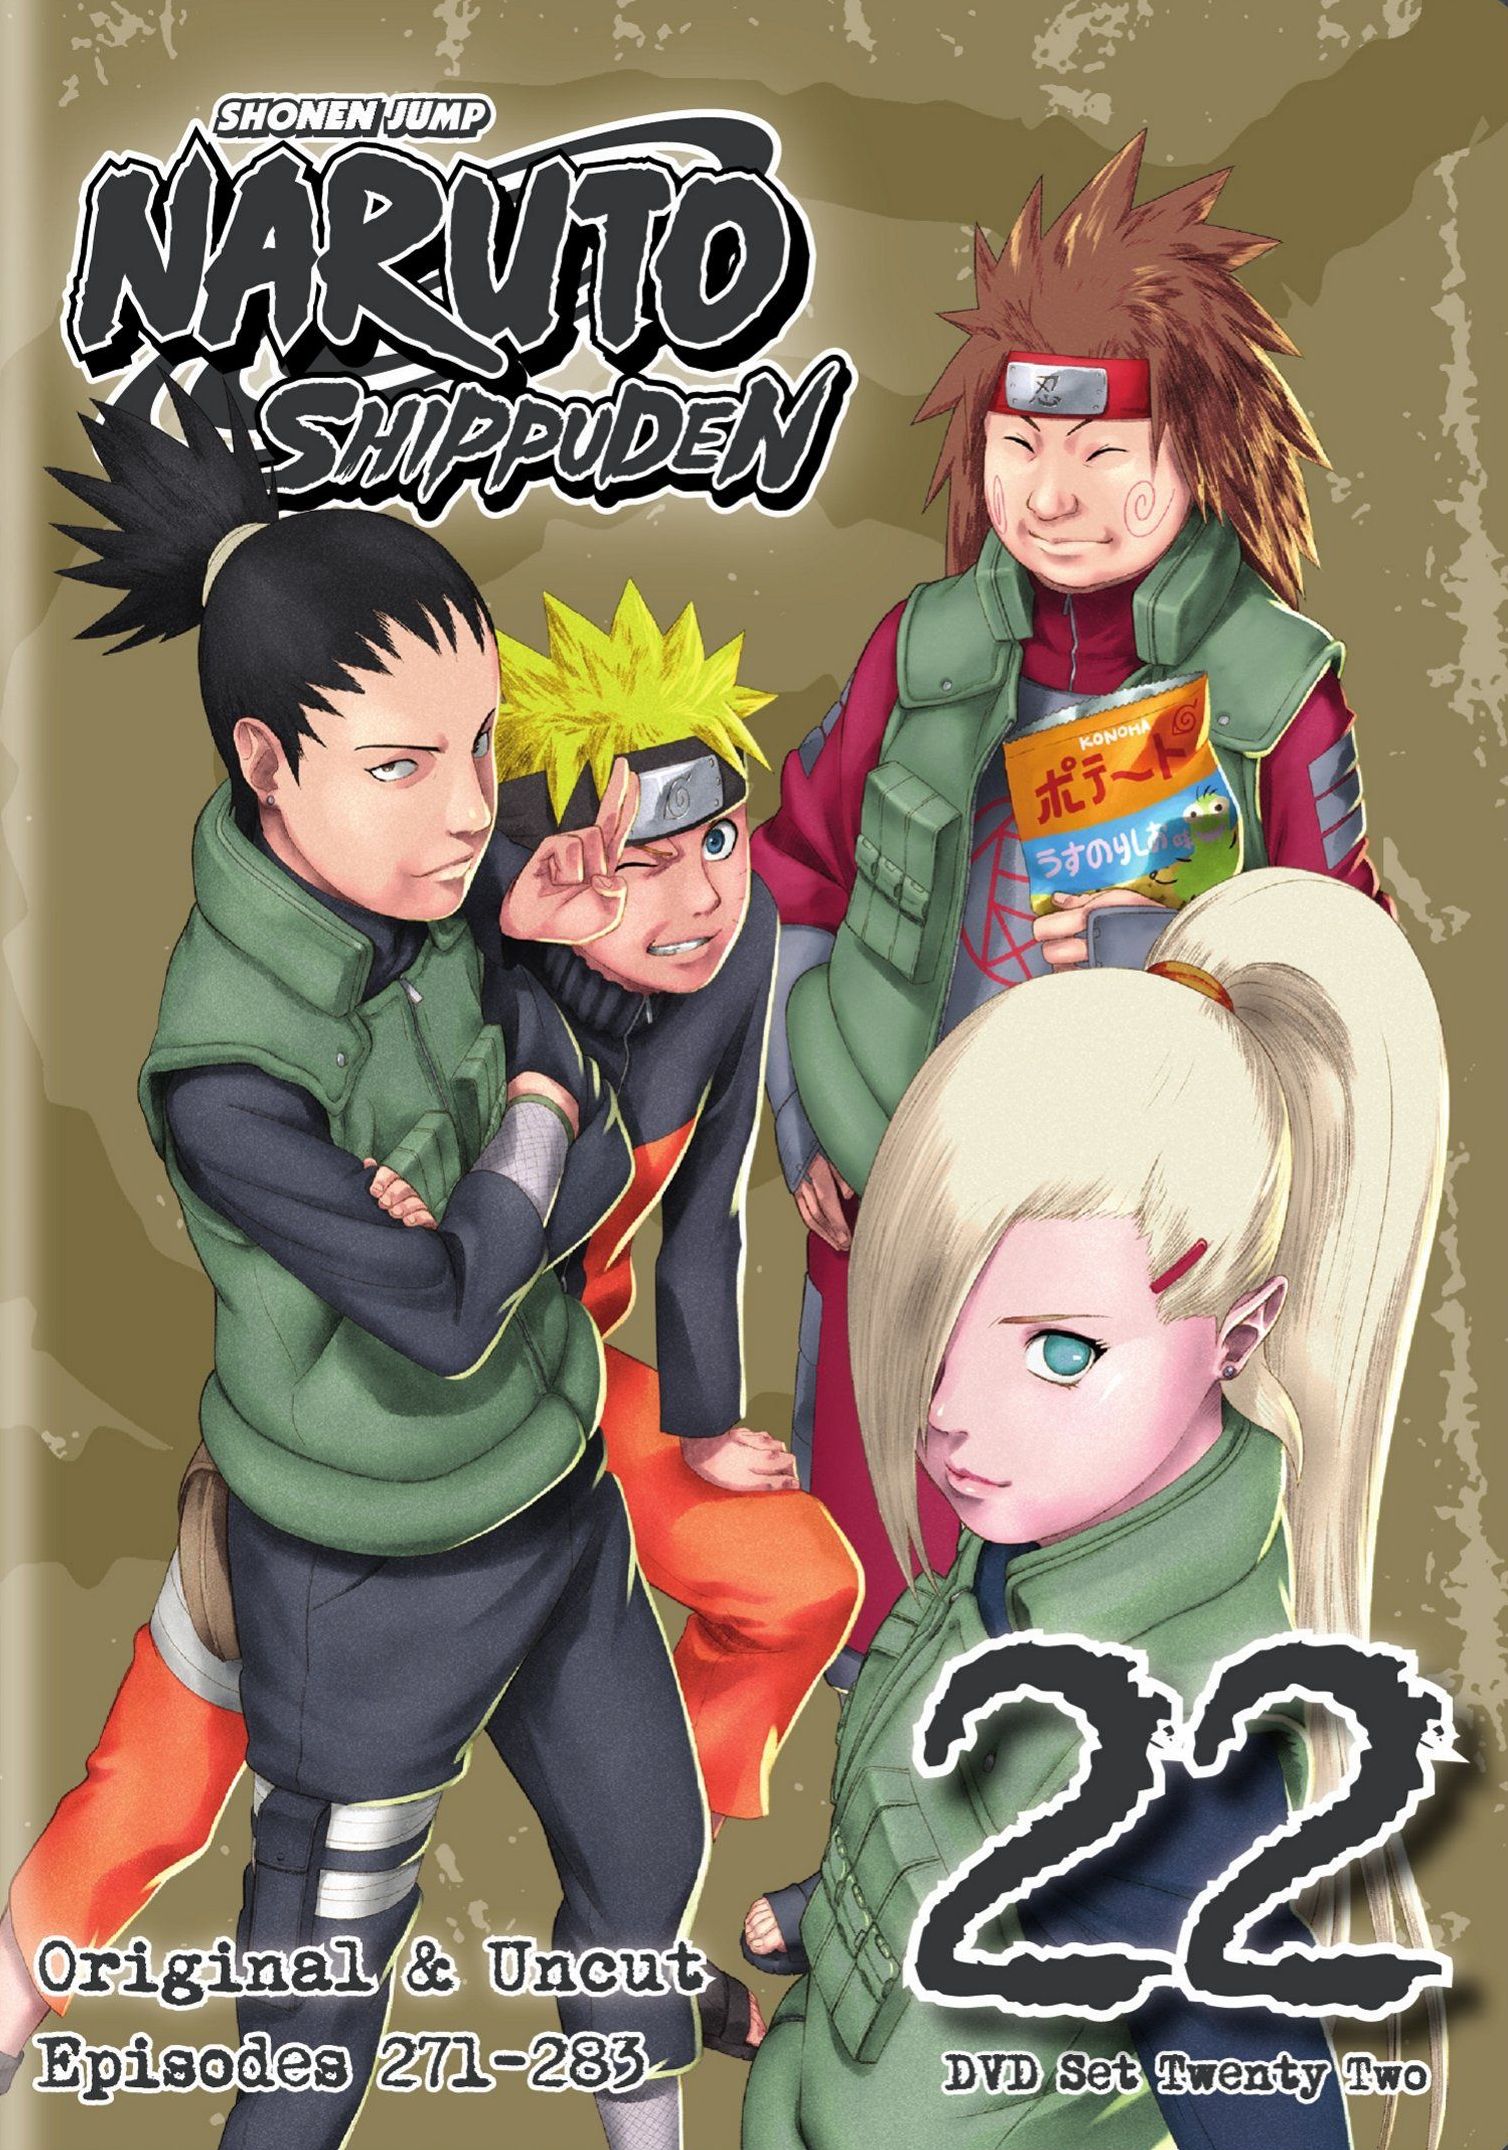 DVD Review: Naruto Shippuden Series 9 Box Set